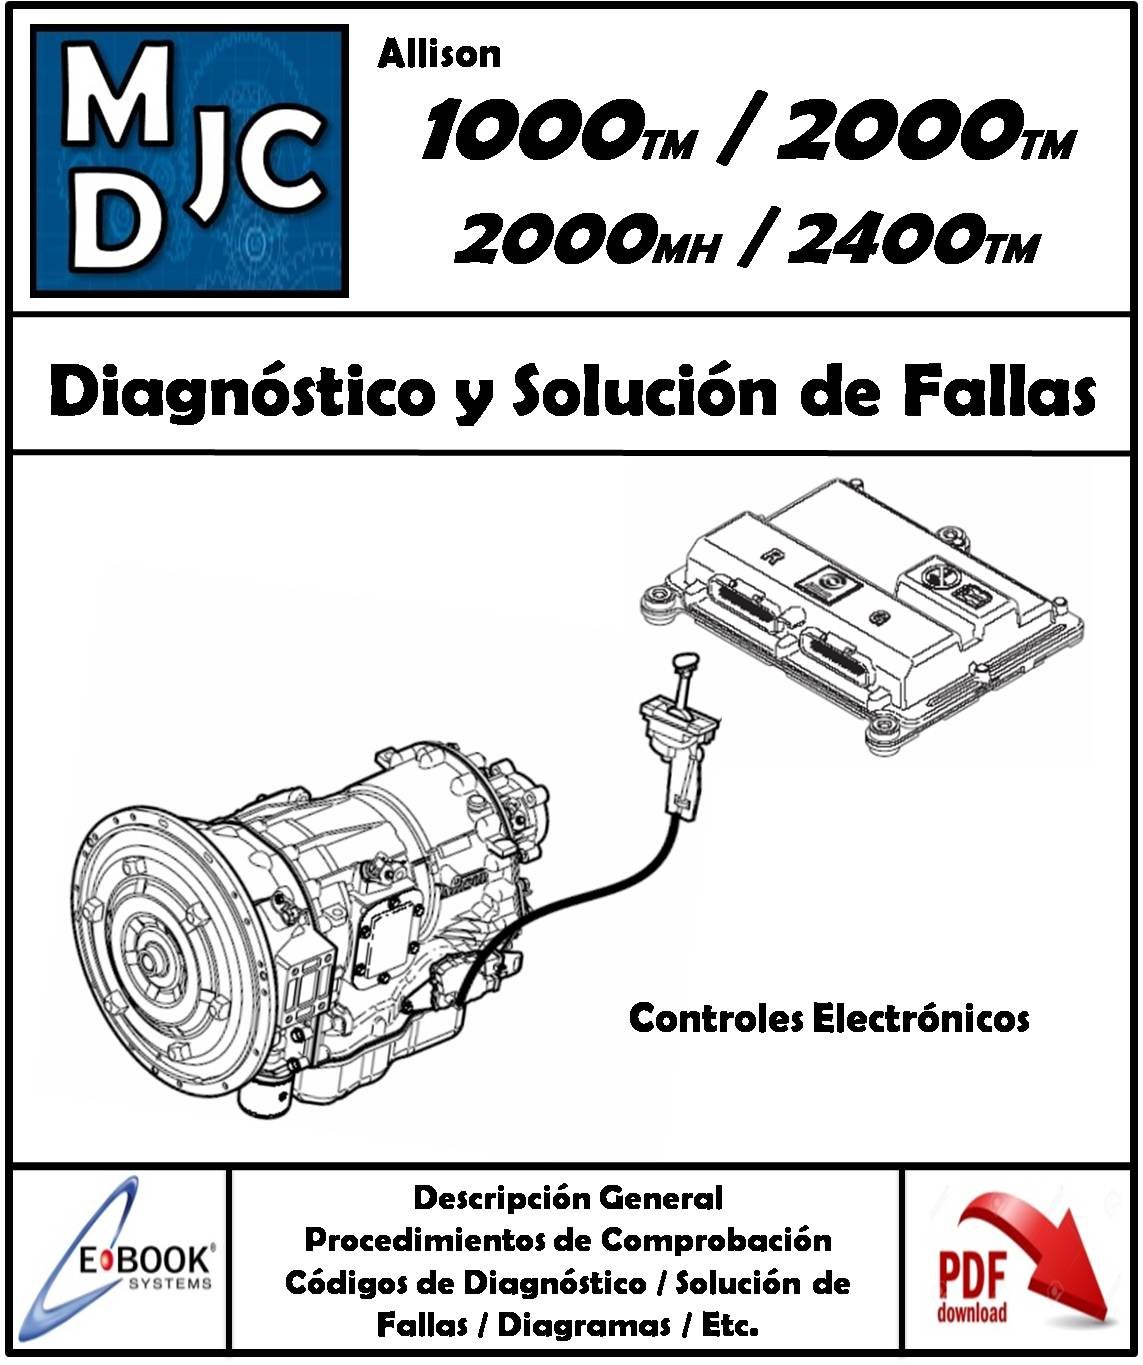 Manual de Taller ( Diagnóstico ) Caja Automática Allison 1000 - 2000 - 2400 Series